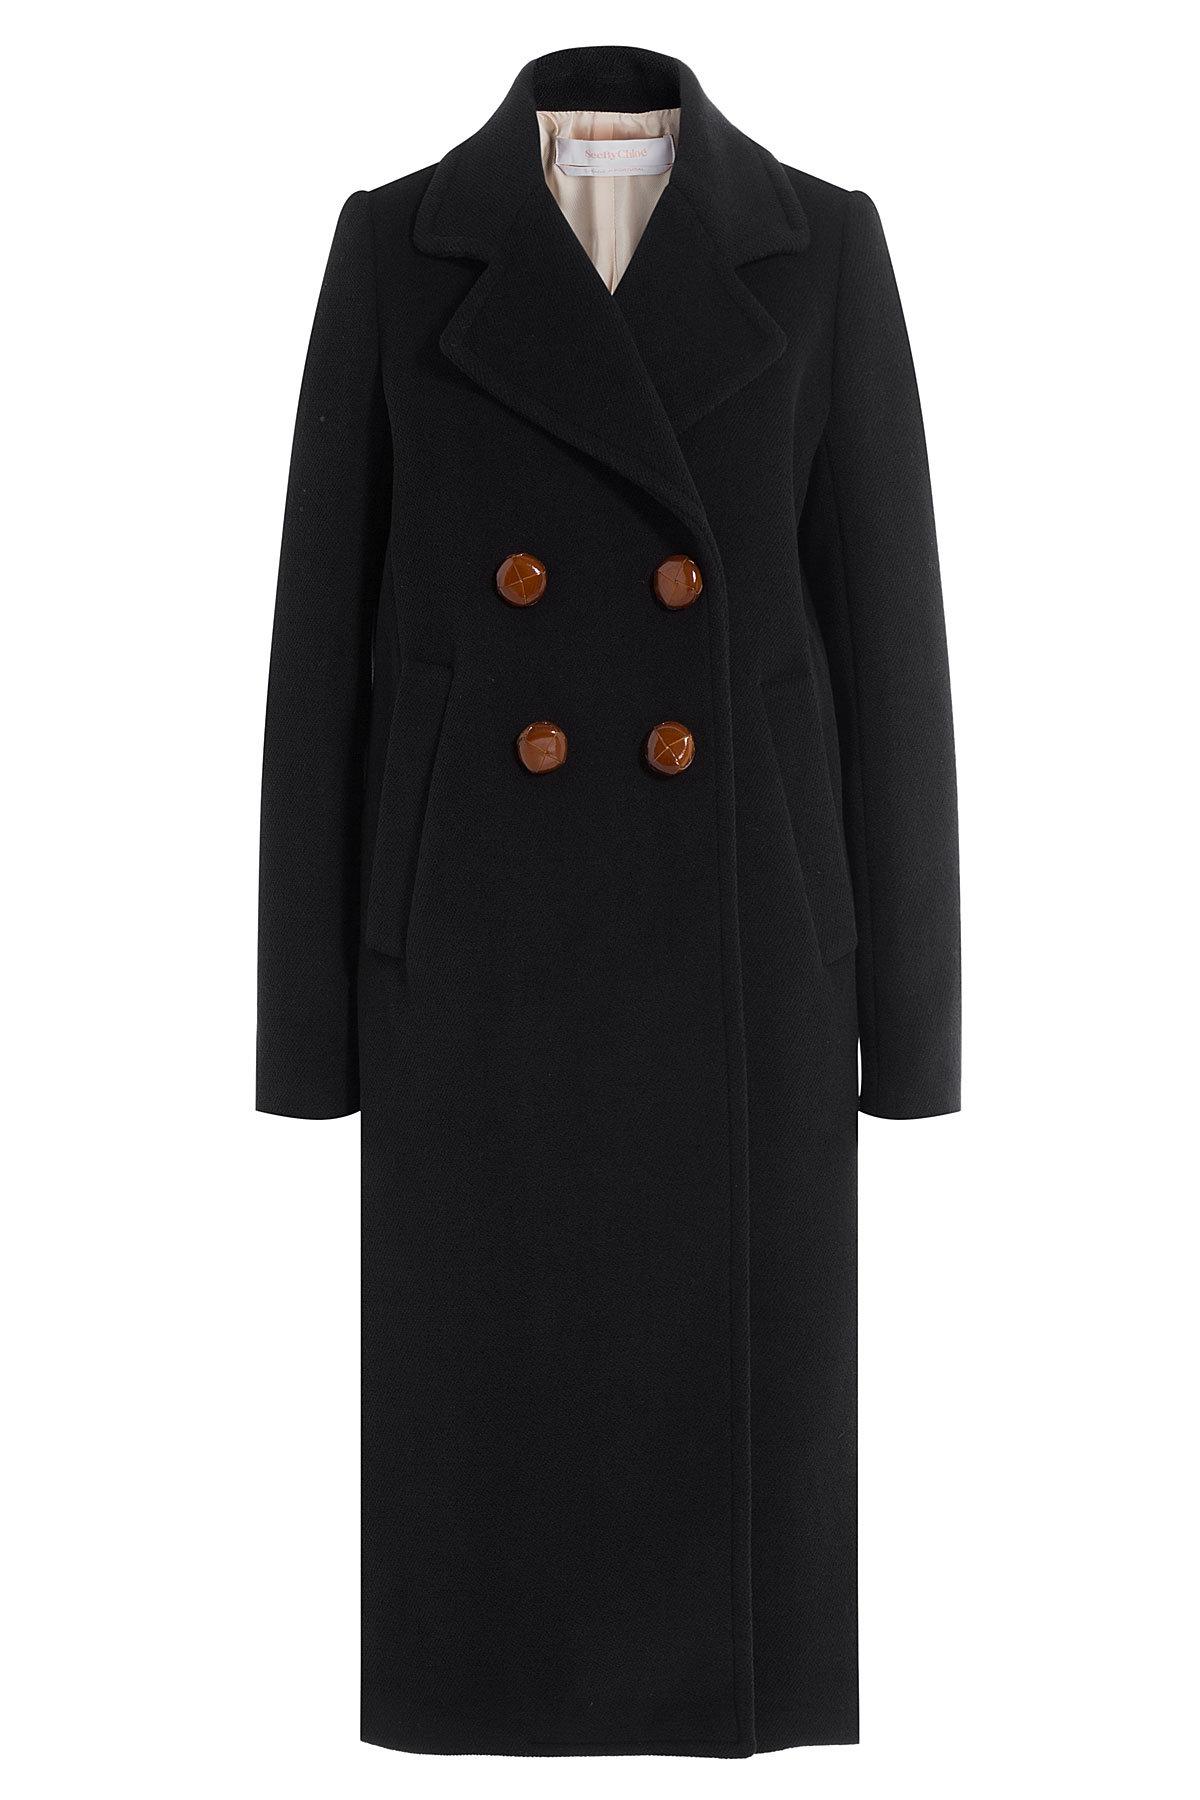 See by chloé Wool-blend Coat in Black | Lyst